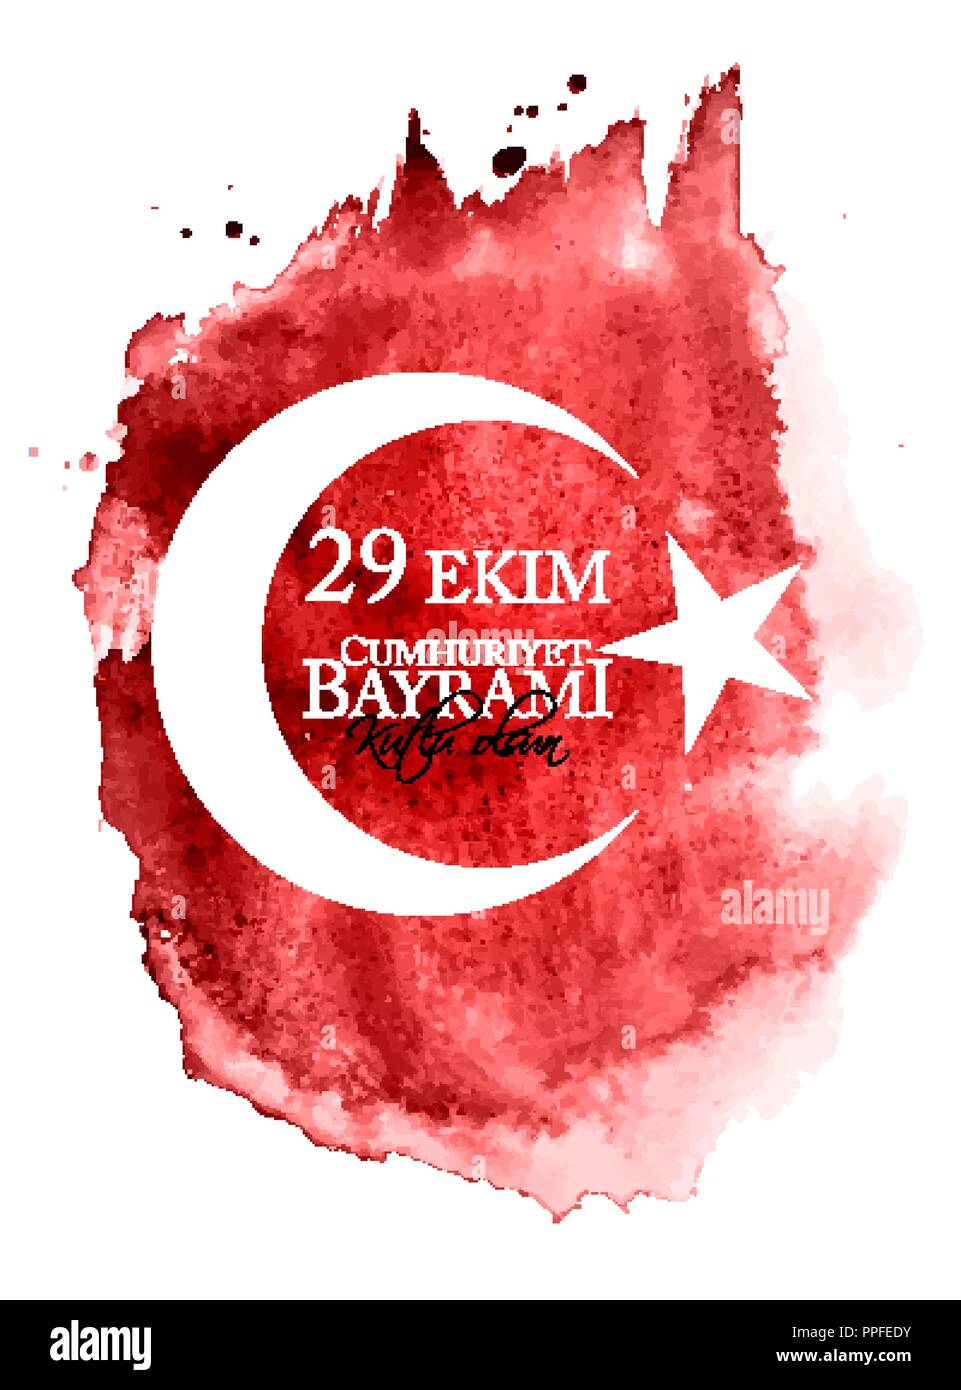 29 Ekim Cumhuriyet Bayrami kutlu olsun. Translation: 29 october Republic Day Turkey and the National Day in Turkey, Happy holiday Stock Vector